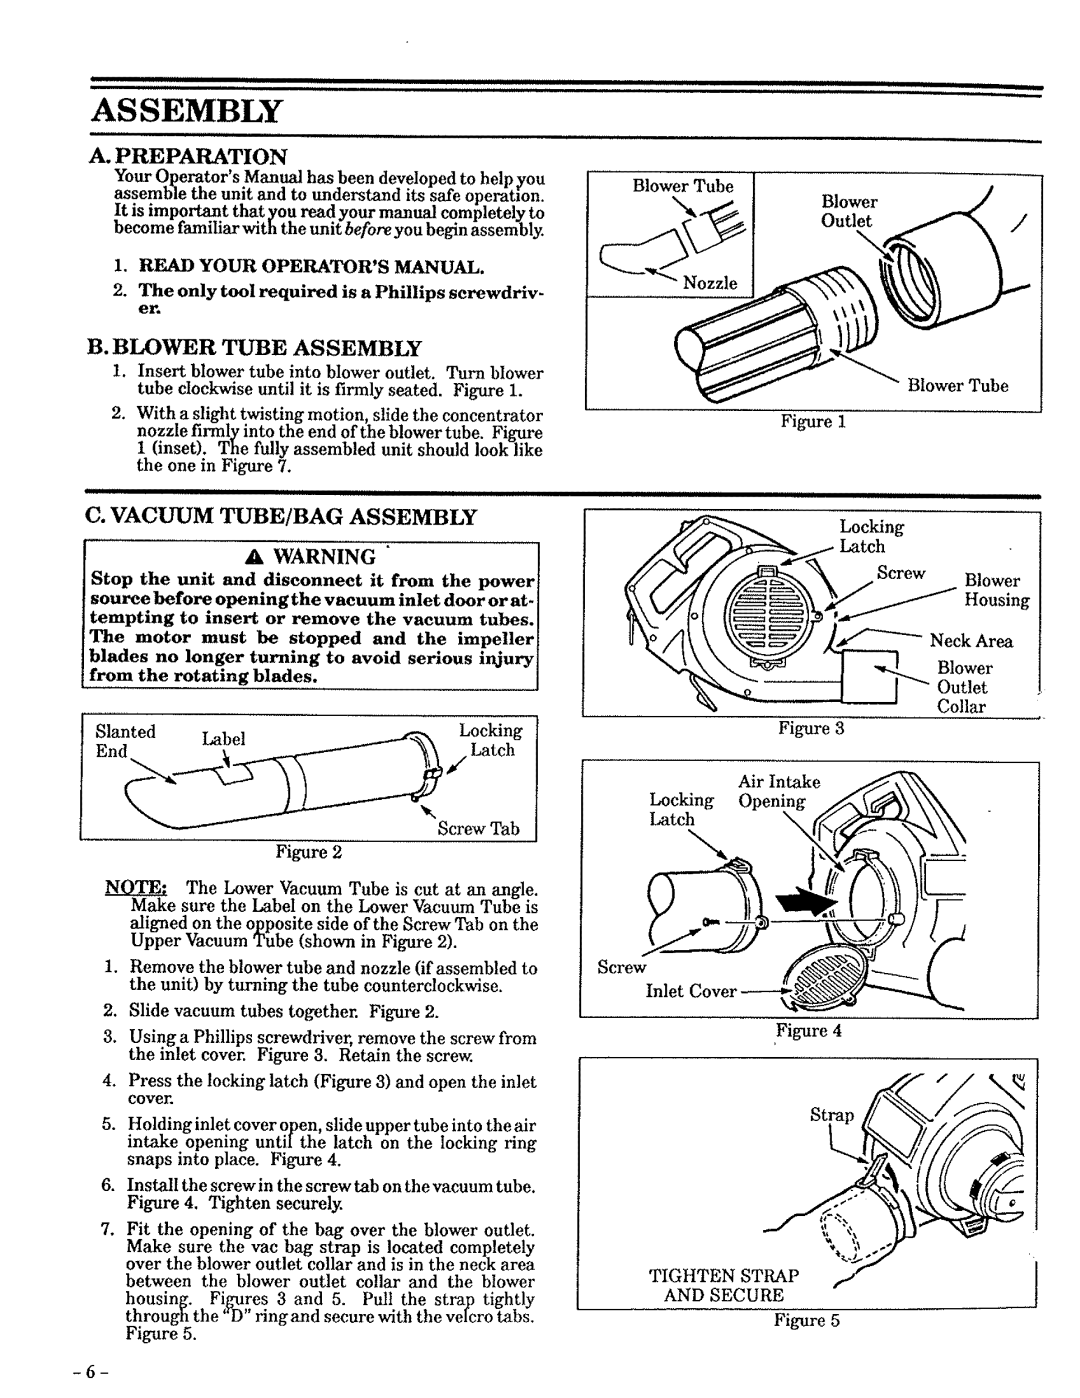 Craftsman 257.796362 manual A.Preparation, B.Blower Tube Assembly, C. Vacuum Tube/Bag Assembly, A Warning 